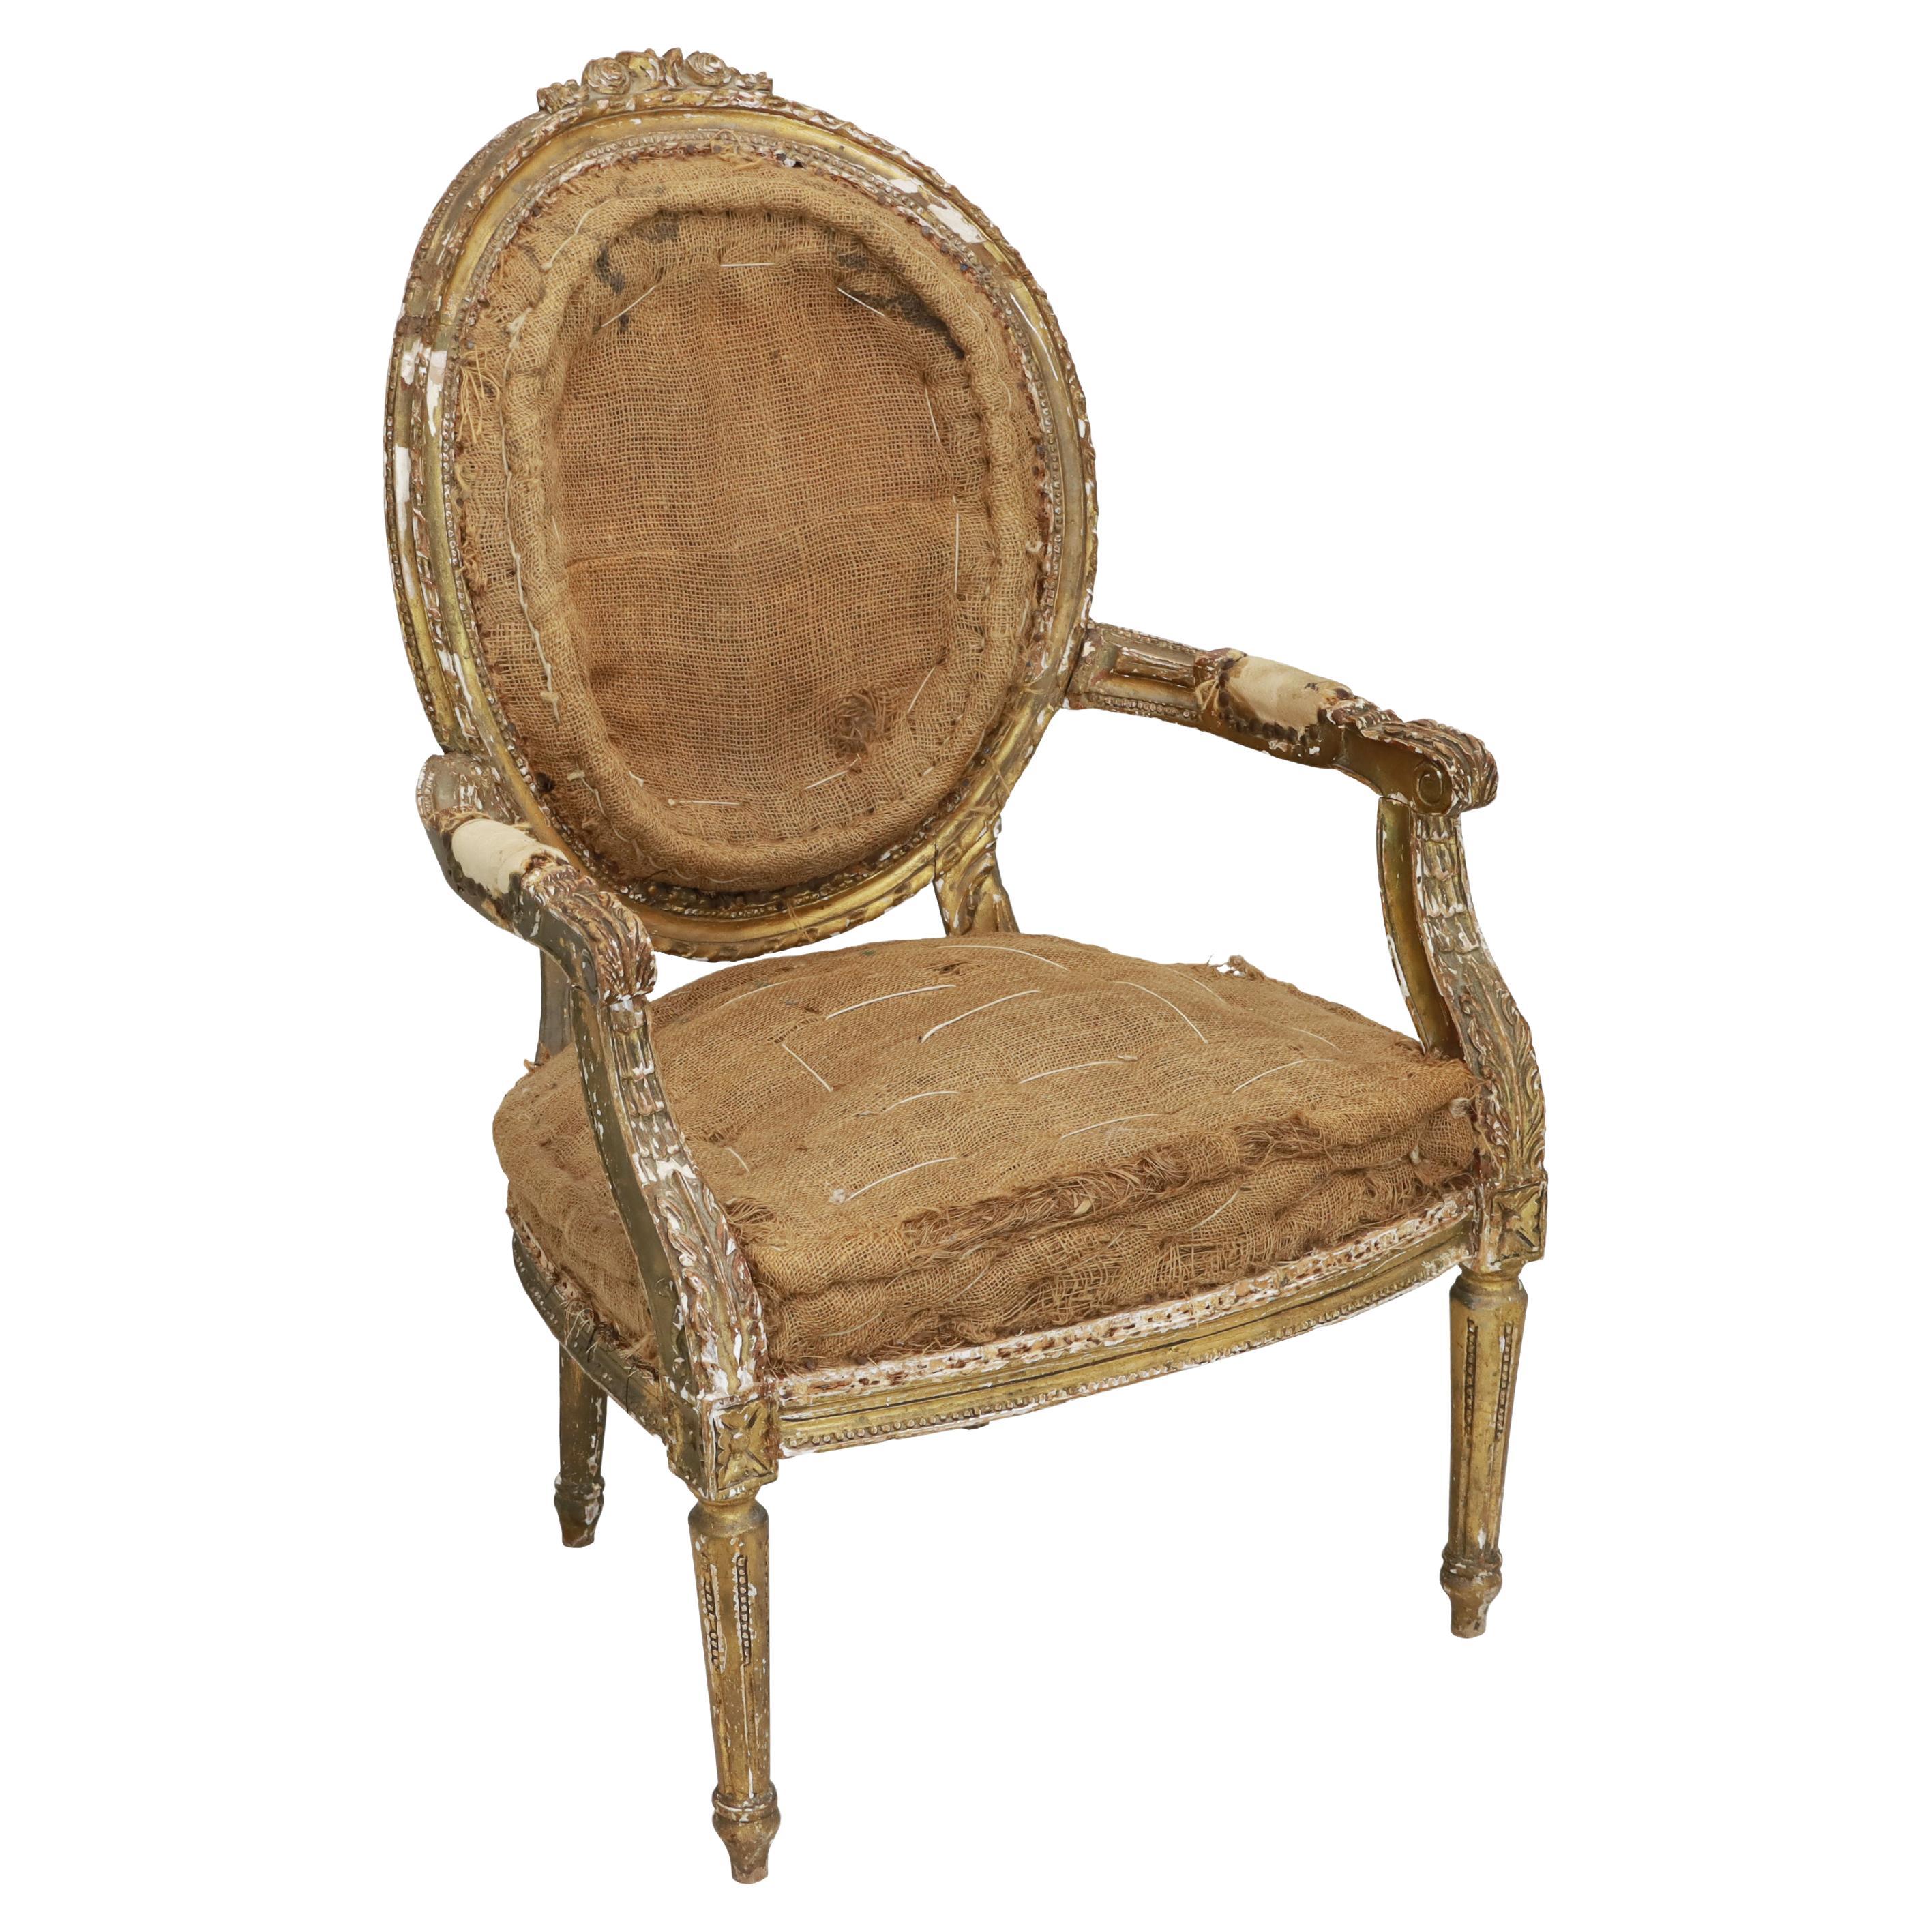 Französischer Fauteuil-Stuhl aus dem 18.